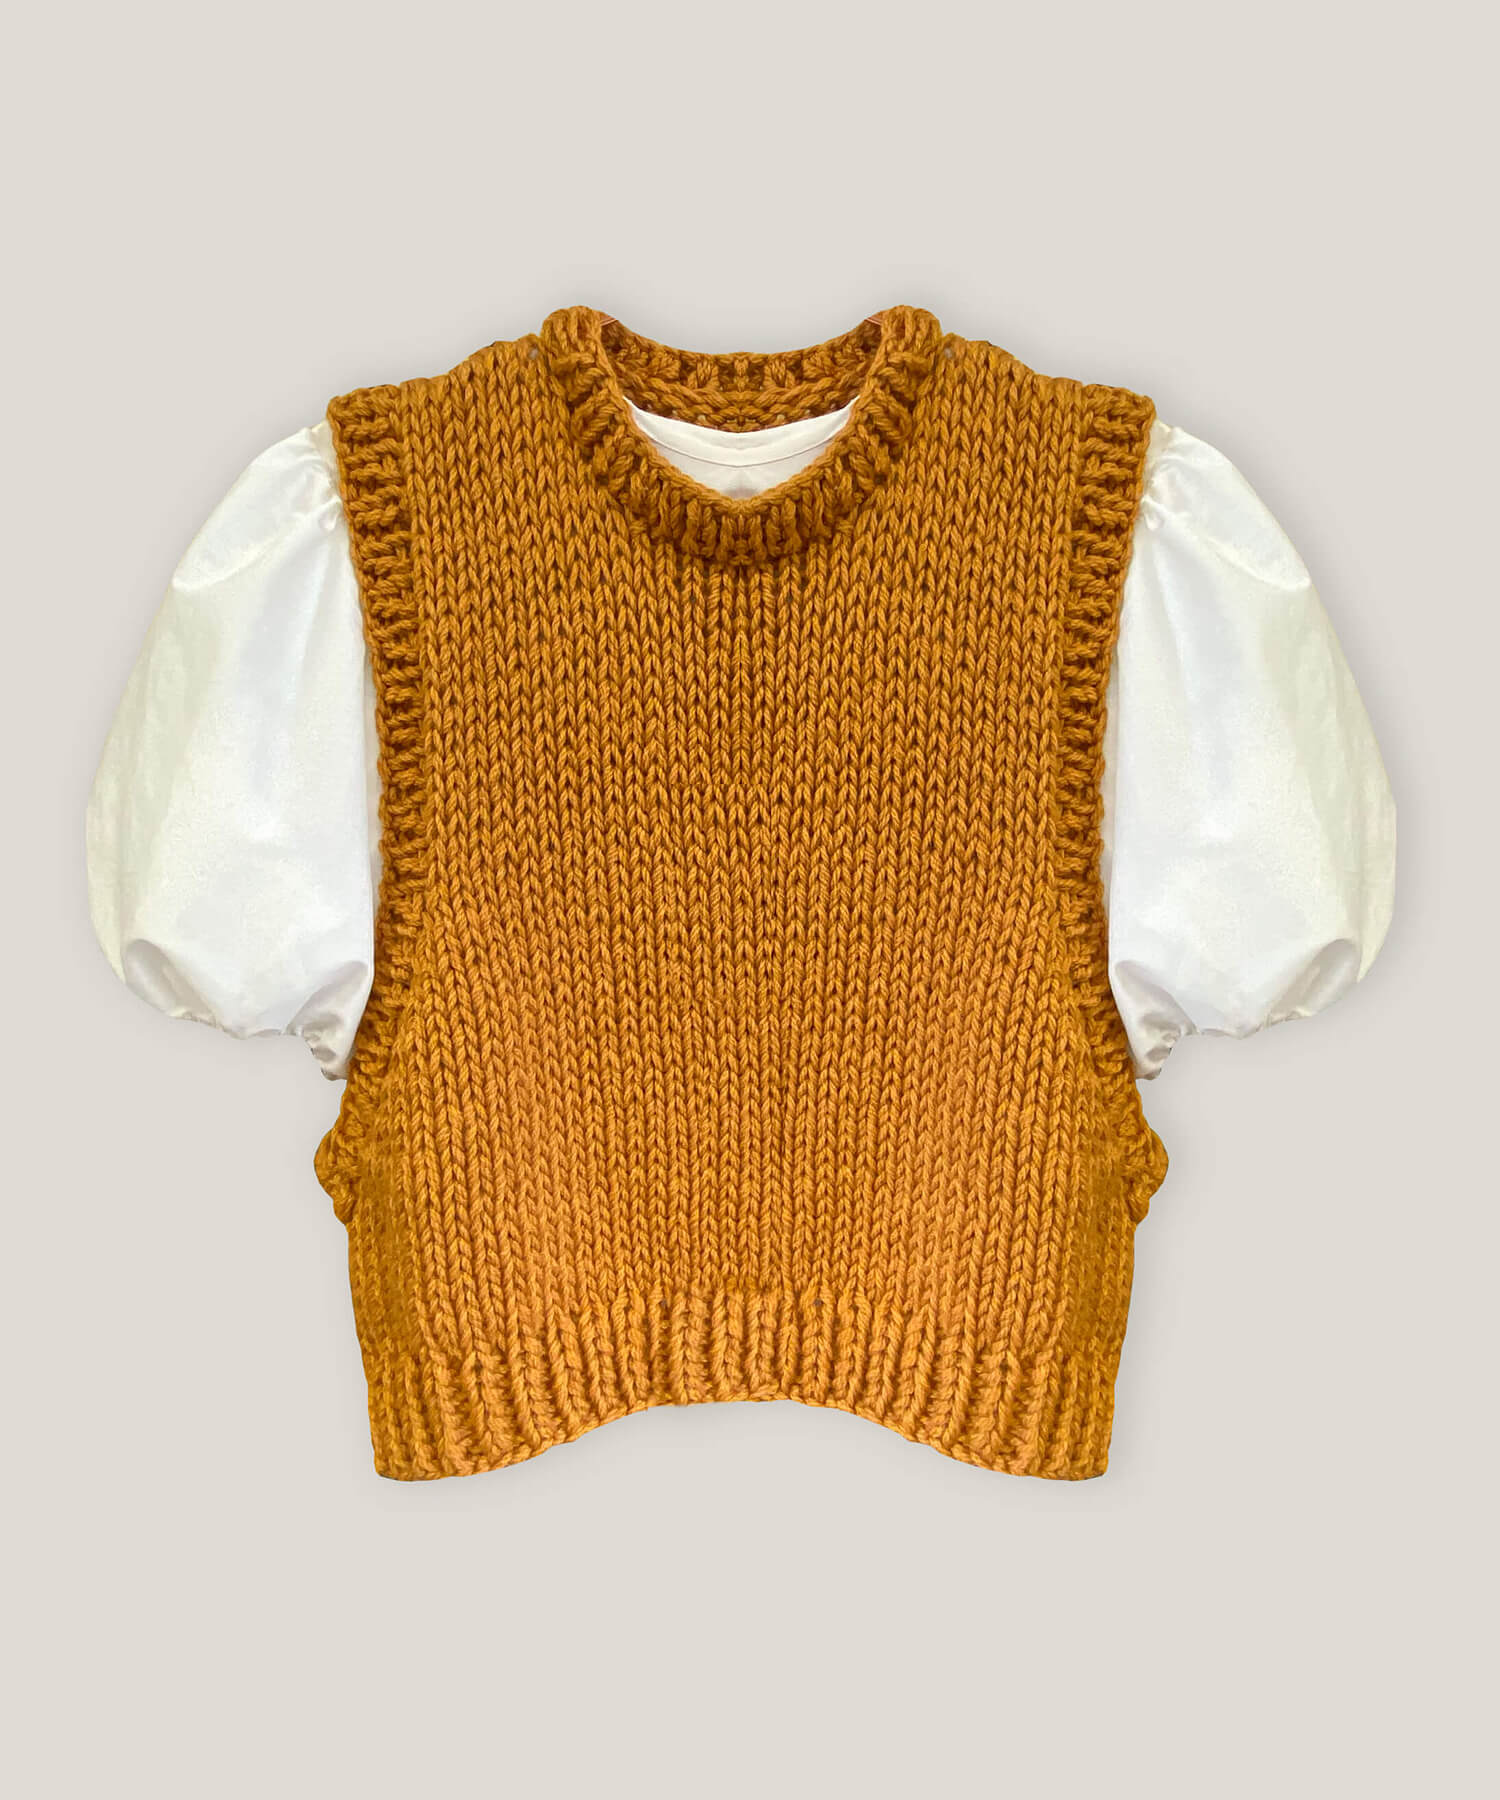 Chunky knit vest – The Slow Fashion Studio